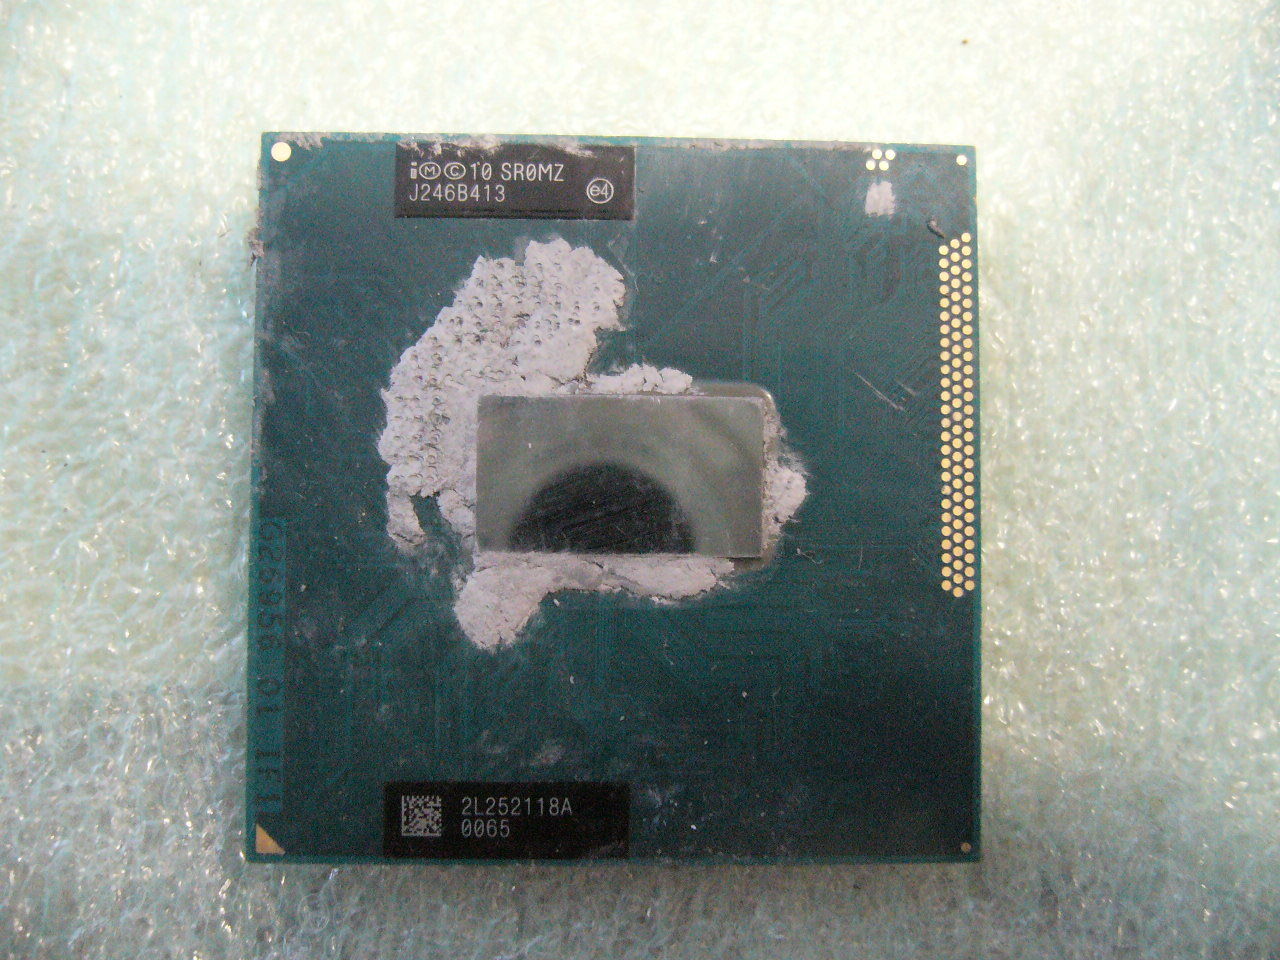 QTY 1x Intel CPU i5-3210M Dual-Core 2.5 Ghz PGA988 SR0MZ Socket G2 NOT WORKING